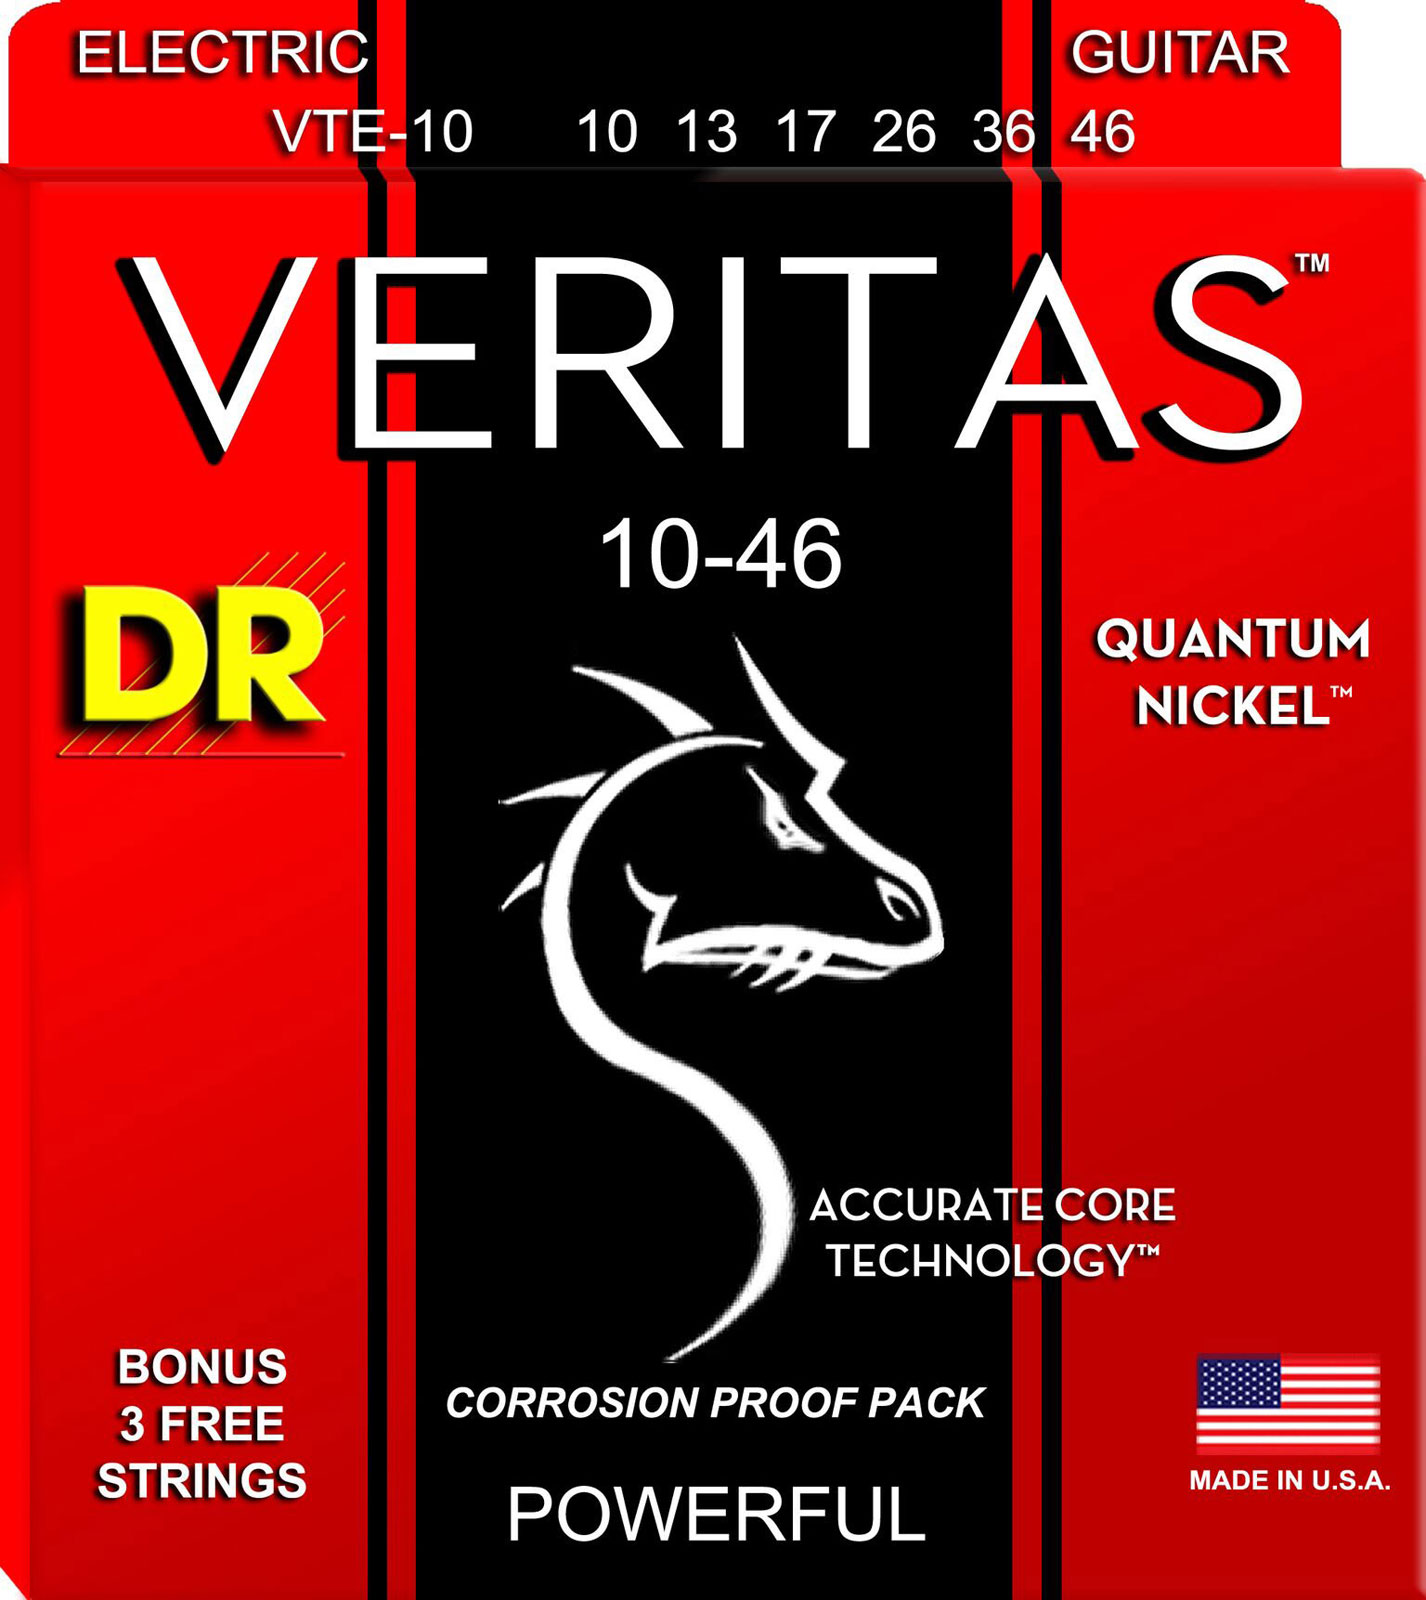 DR STRINGS 10-46 VTE-10 VERITAS